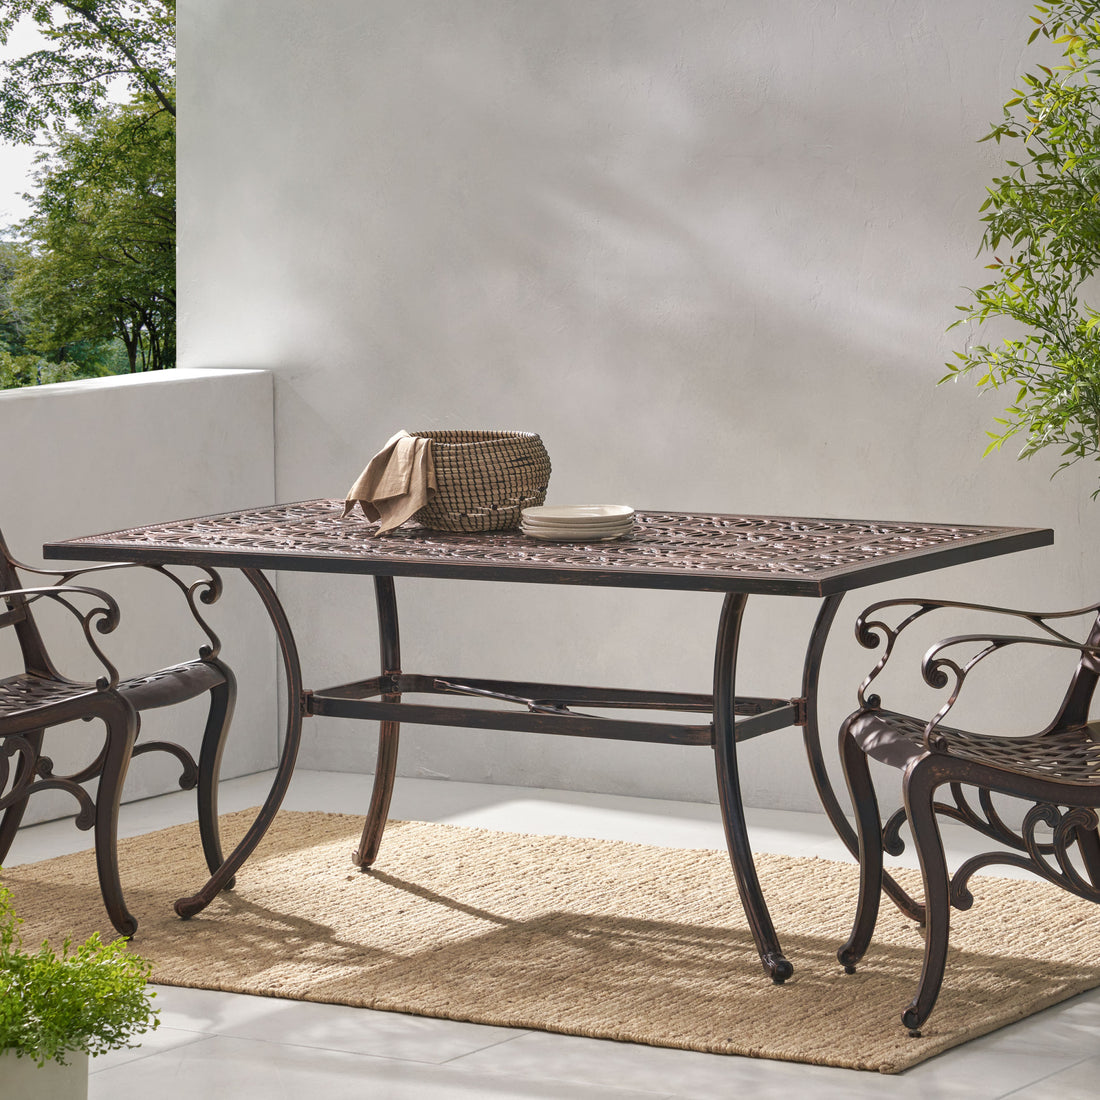 Outdoor Rectangular Cast Aluminum Dining Table,